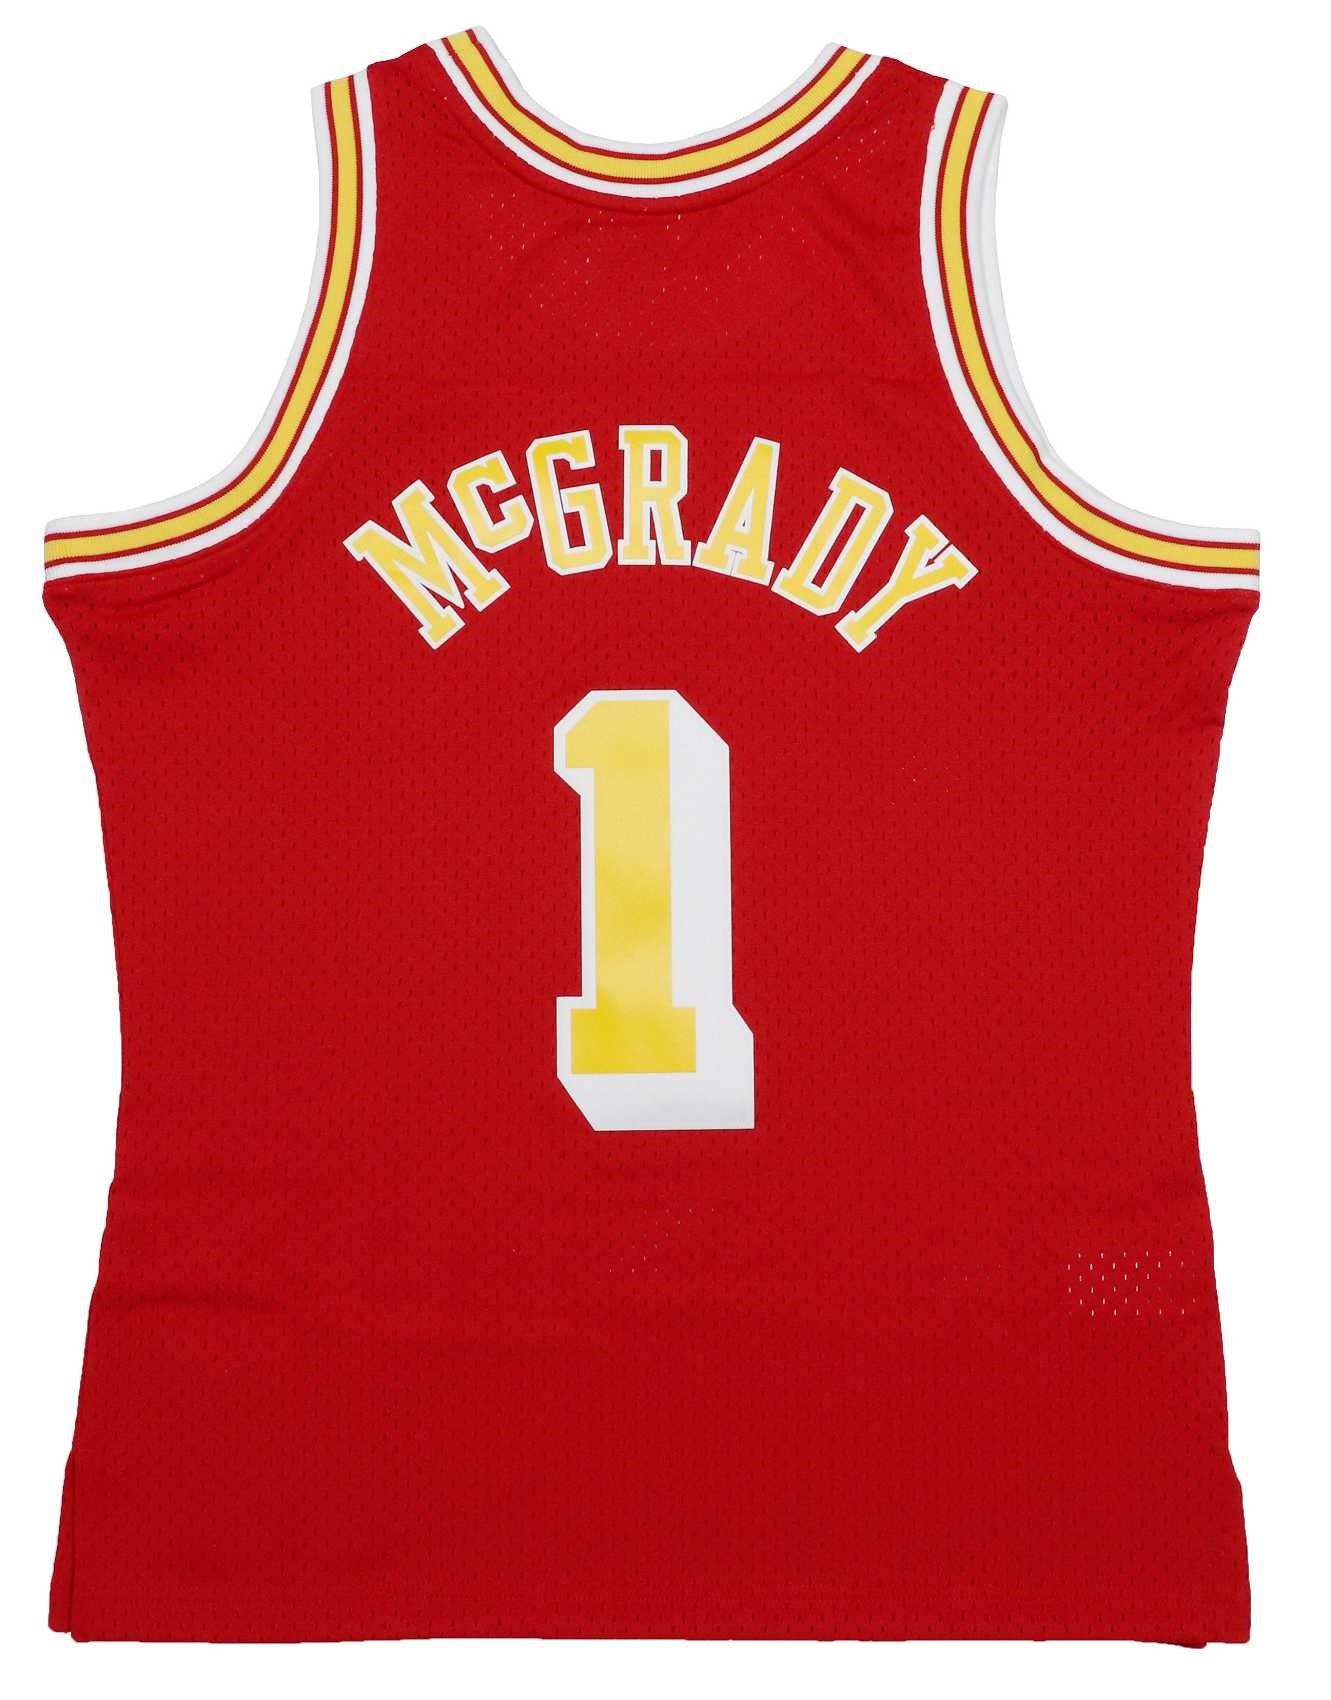 Tracy McGrady #1Houston Rockets NBA Swingman Mitchell & Ness